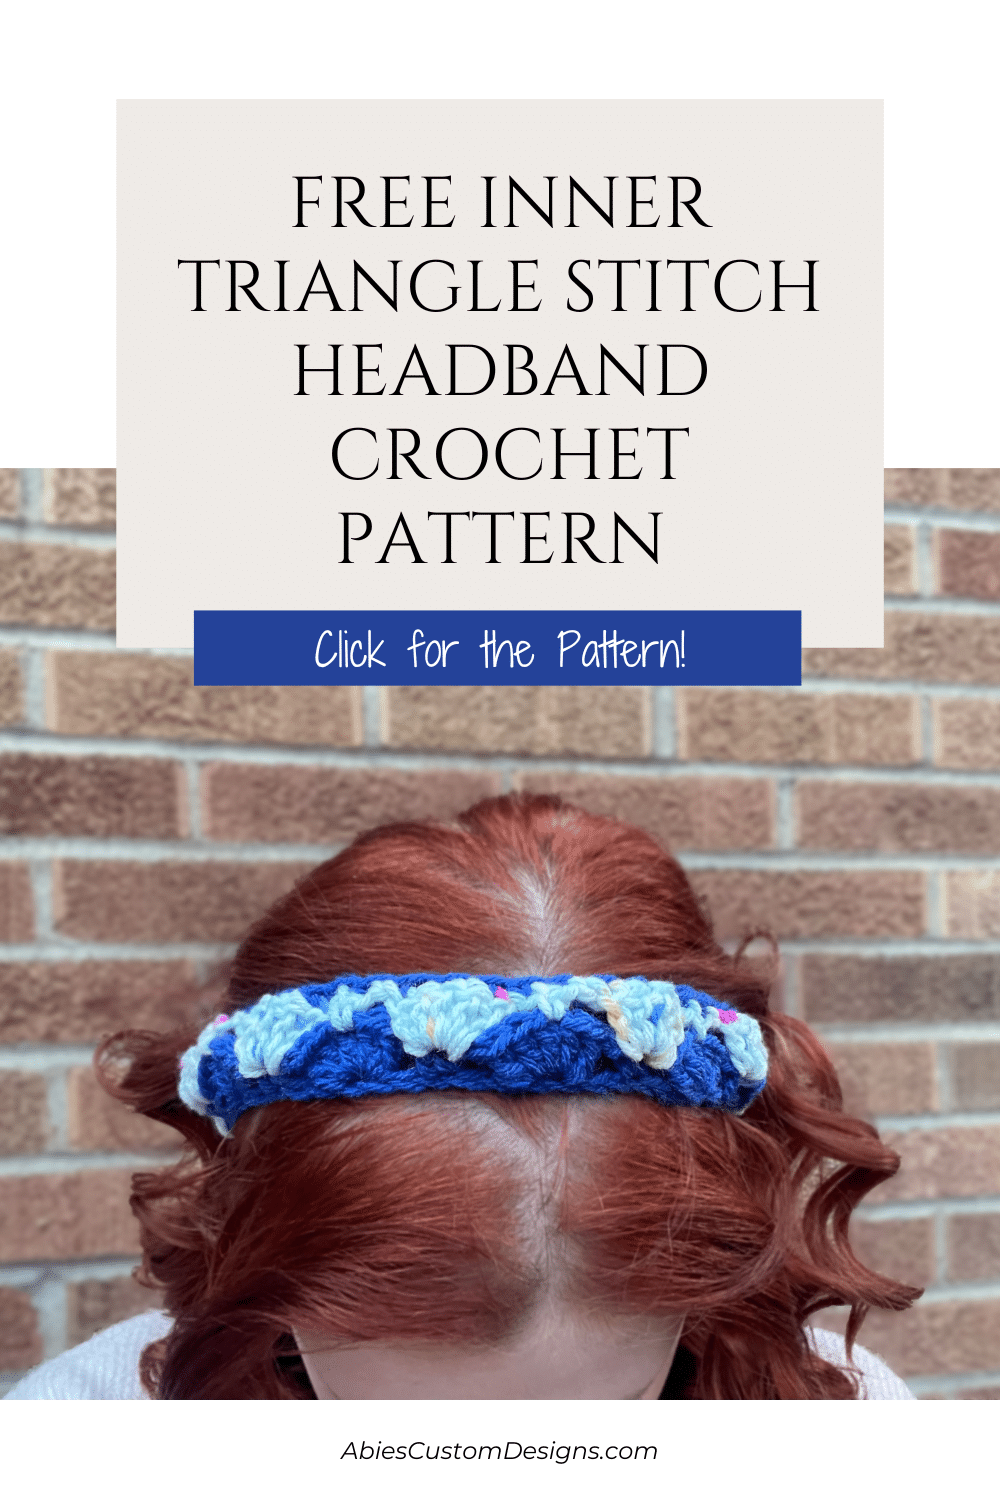 Free inner triangle stitch crochet pattern